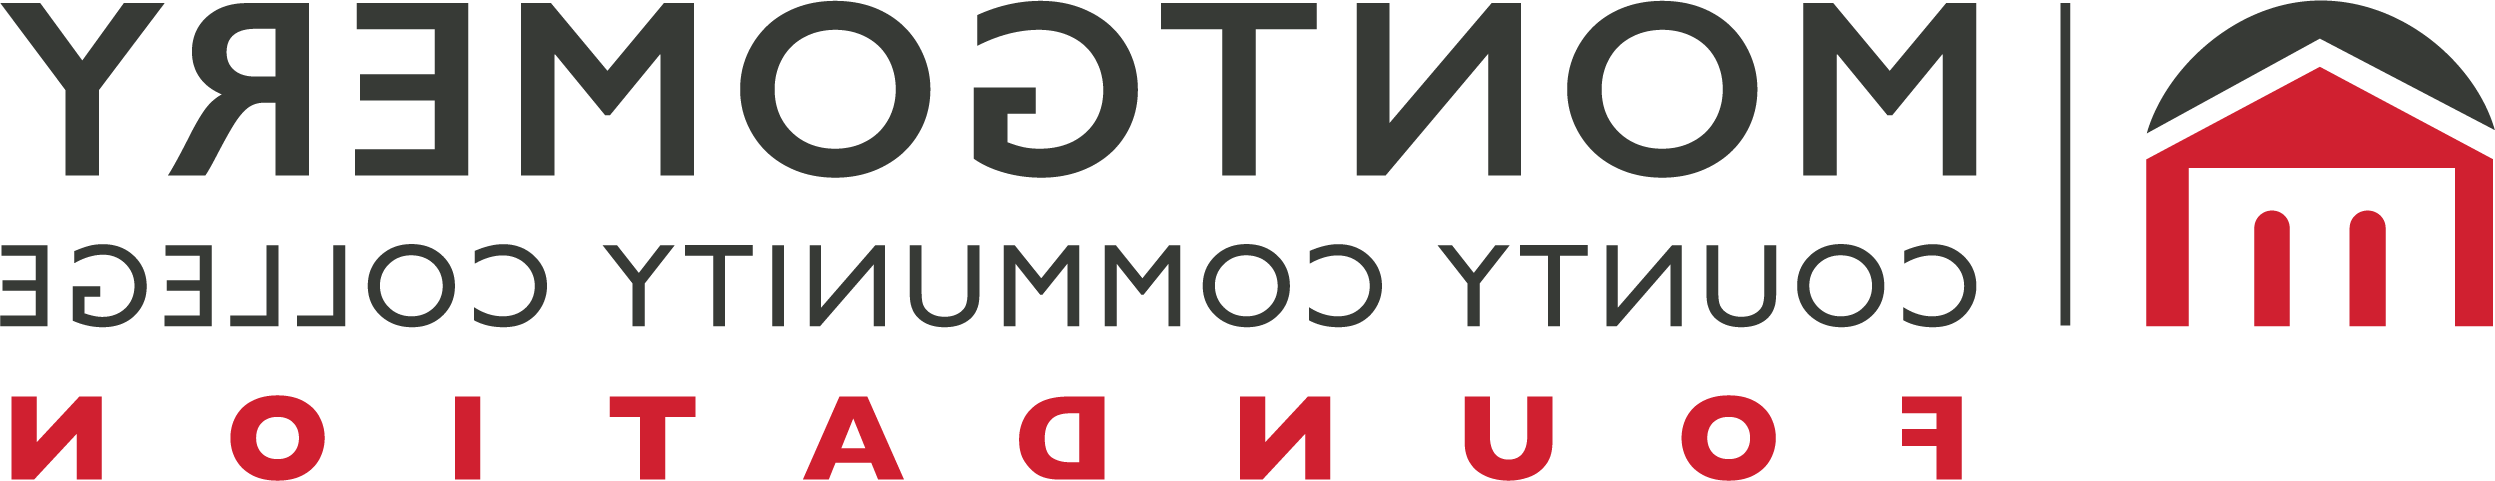 Montco Foundation Banner Logo